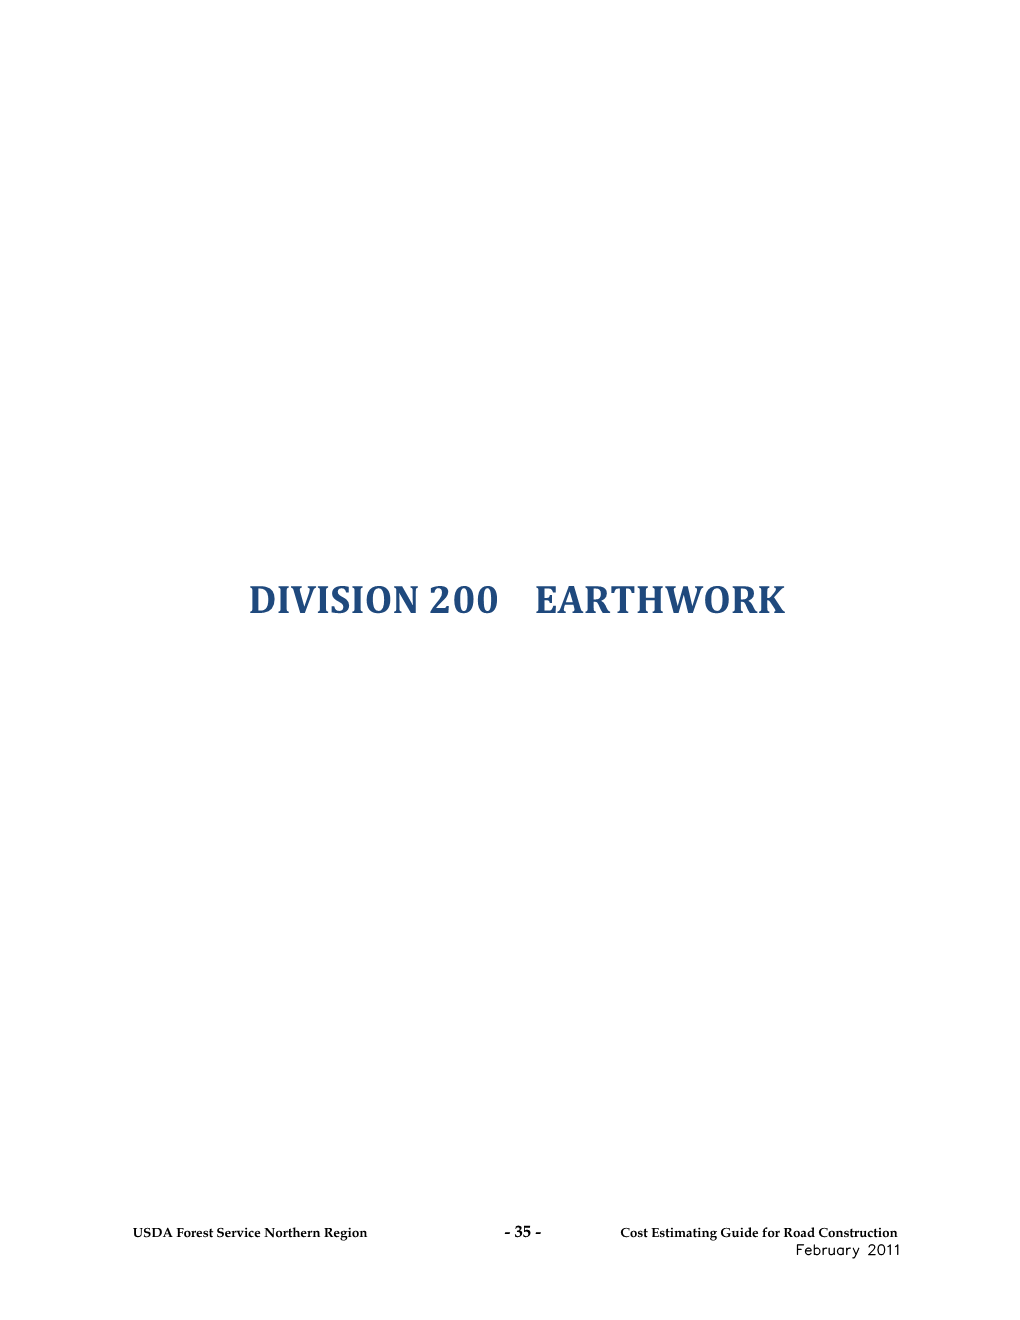 Division 200 Earthwork